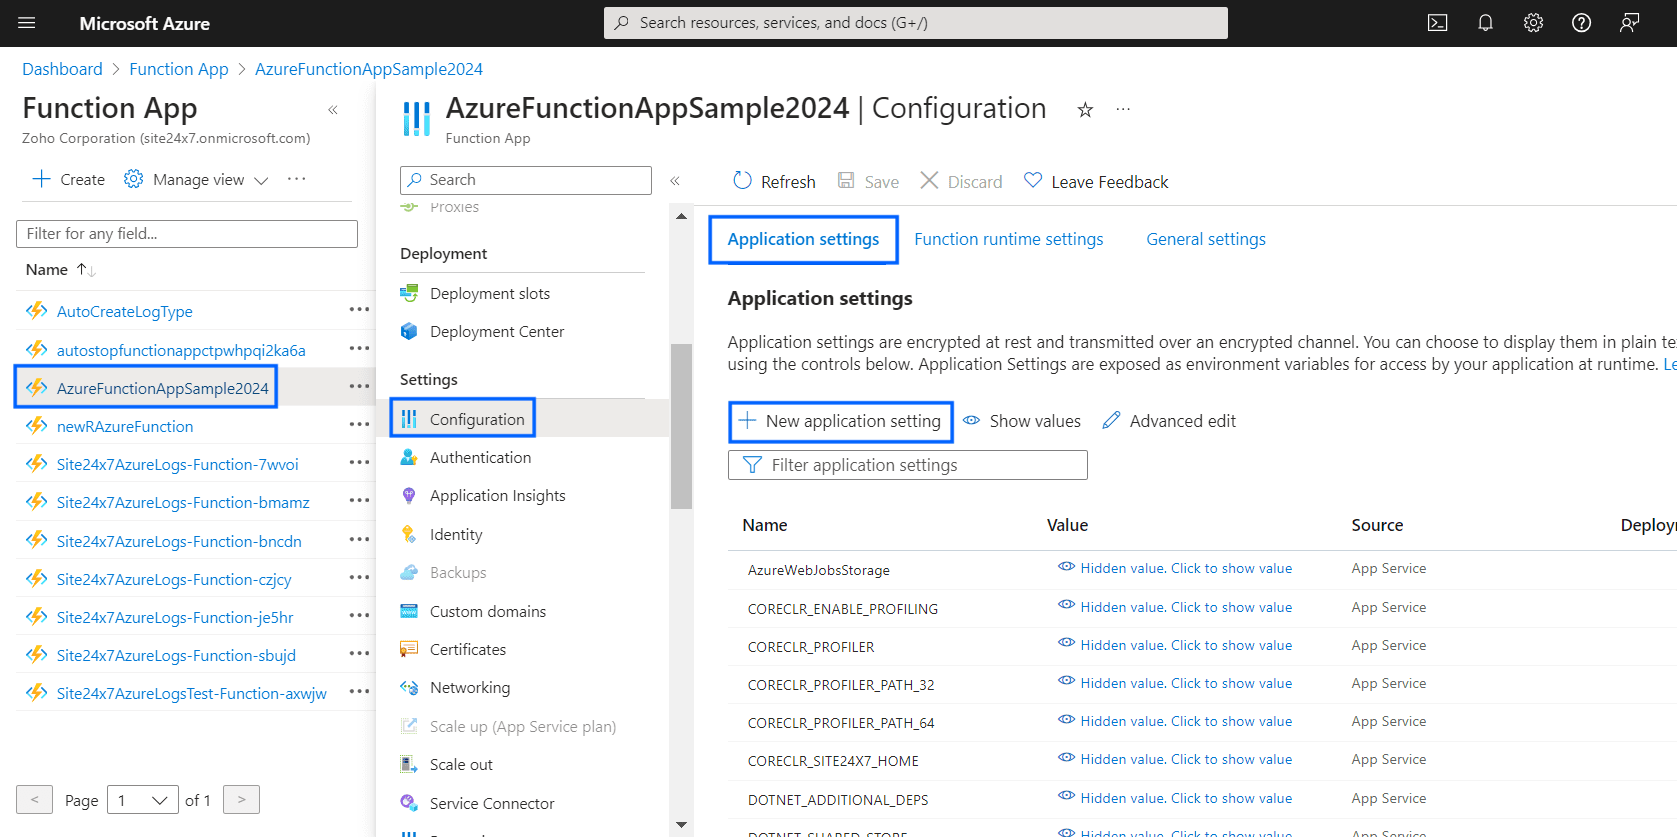 Add/Edit application setting pop-up